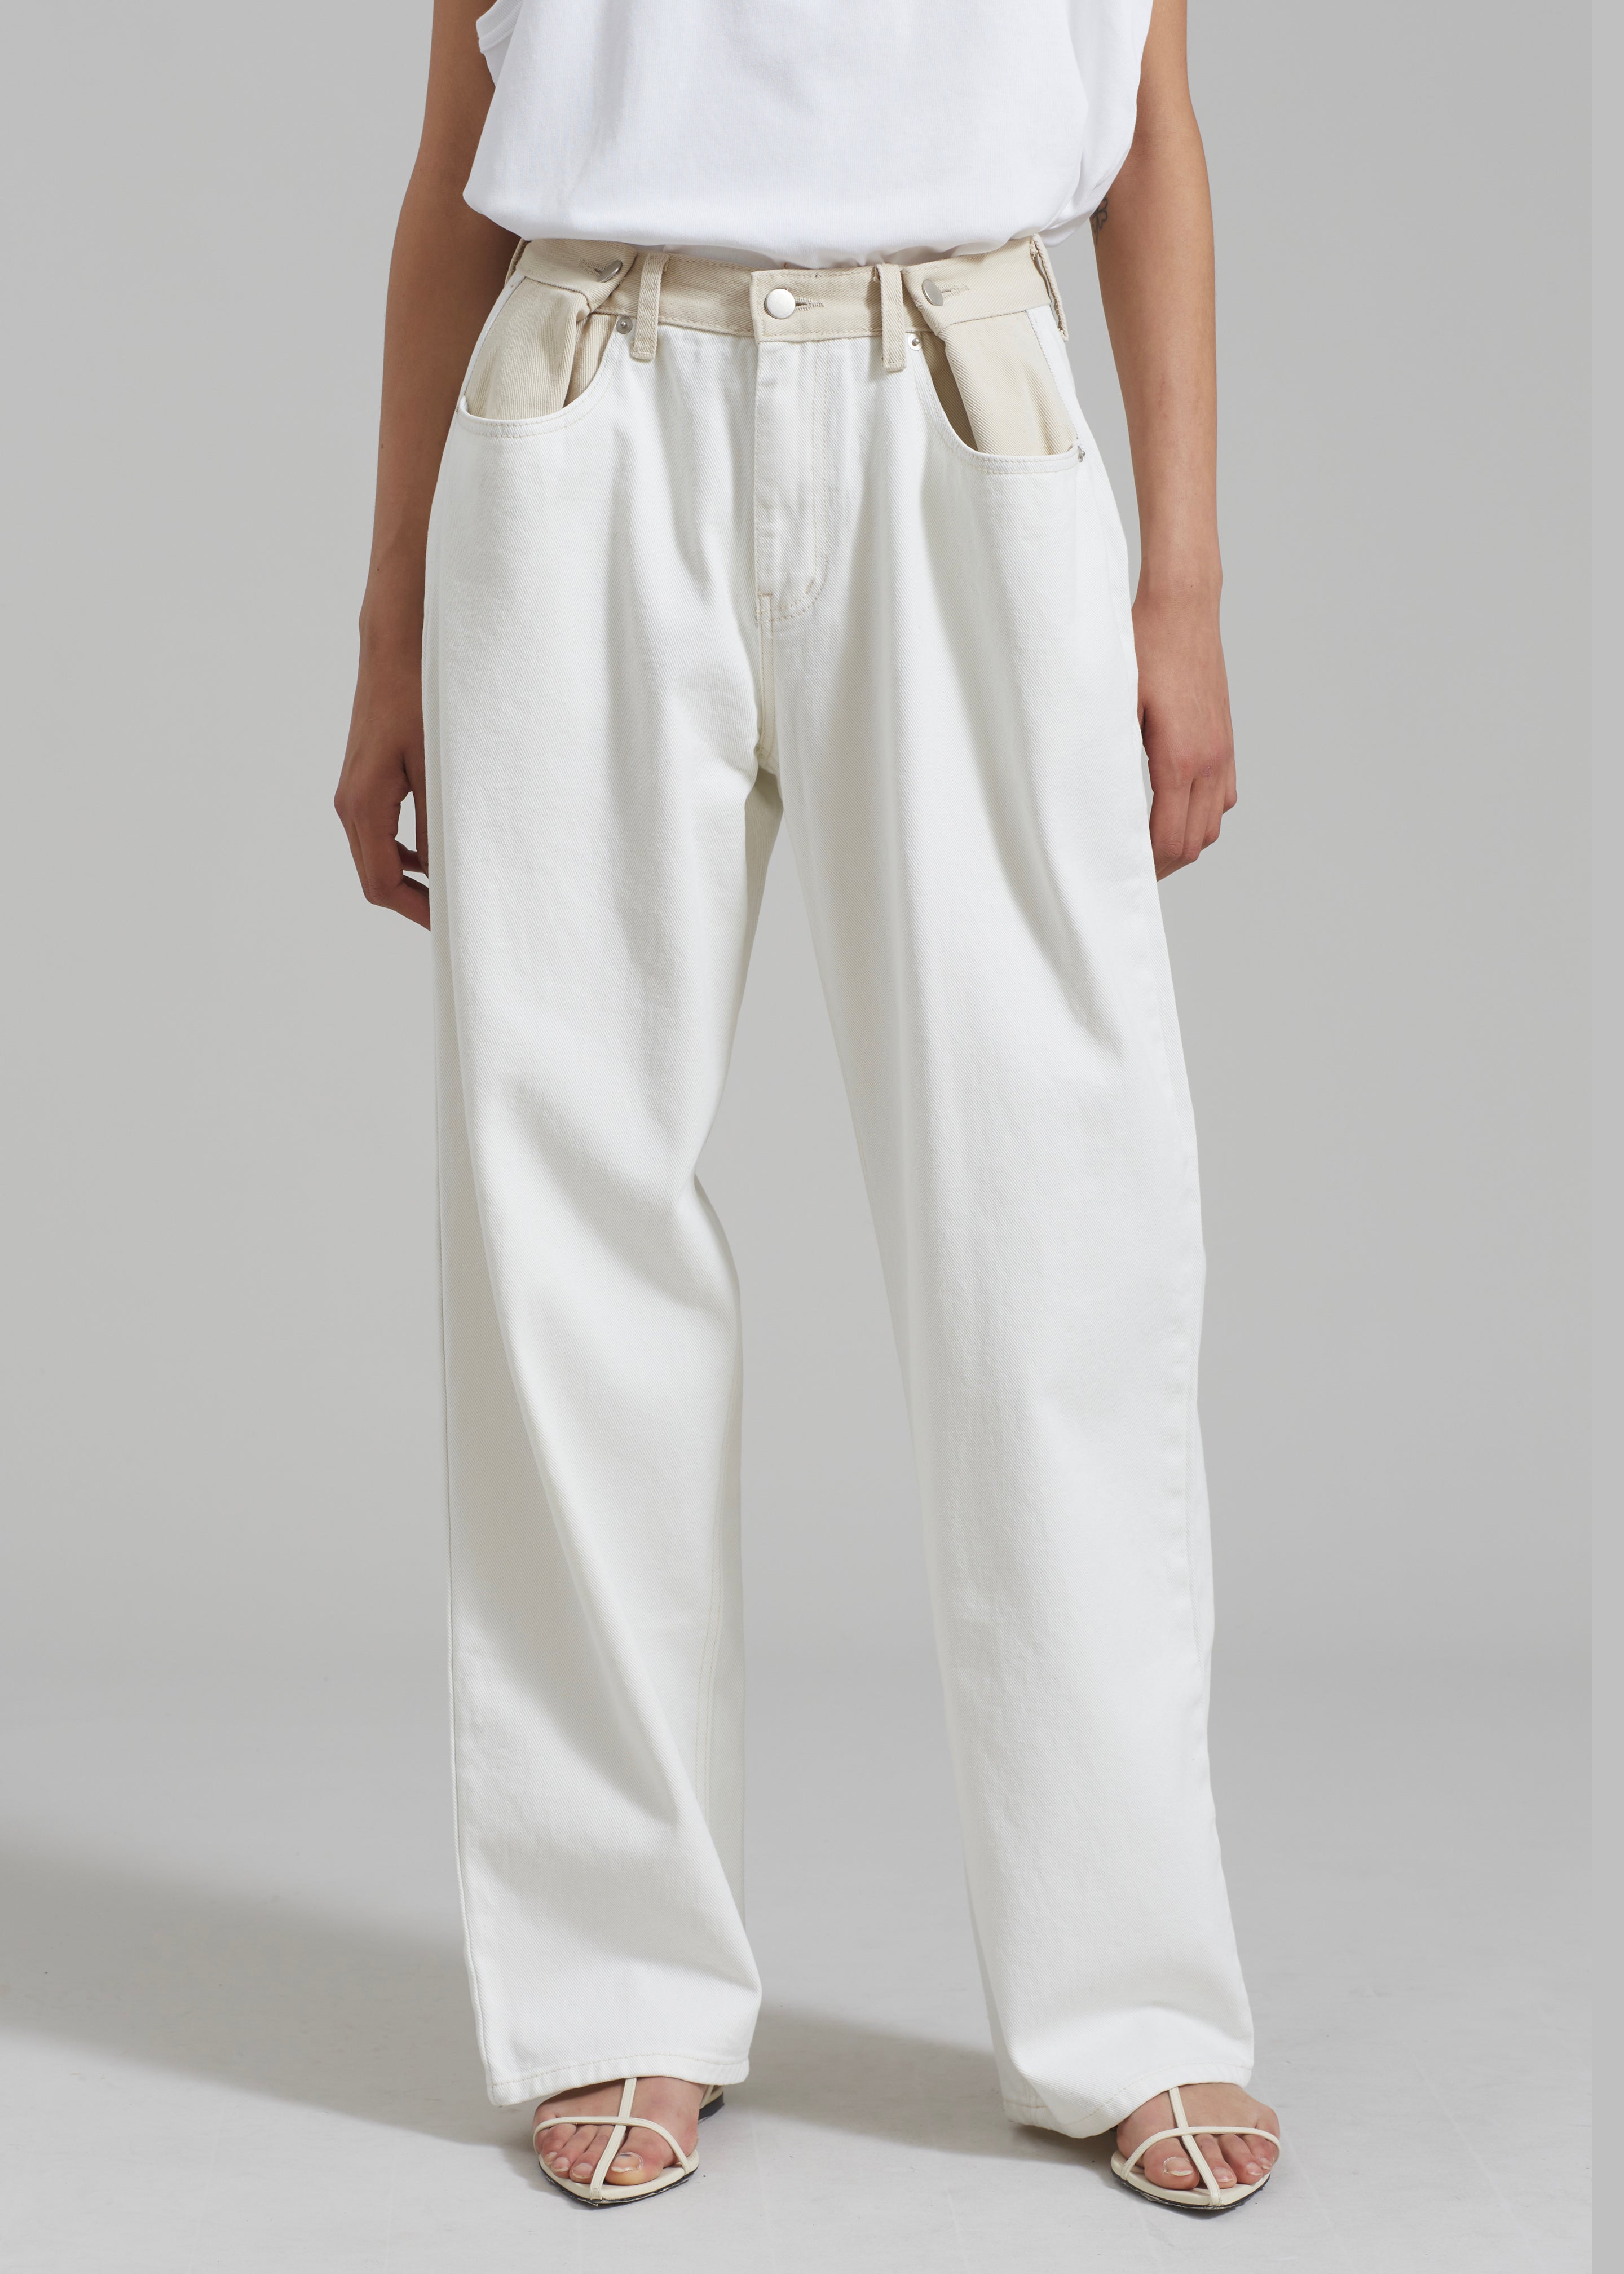 Hayla Contrast Denim Pants - Off White/Beige - 10